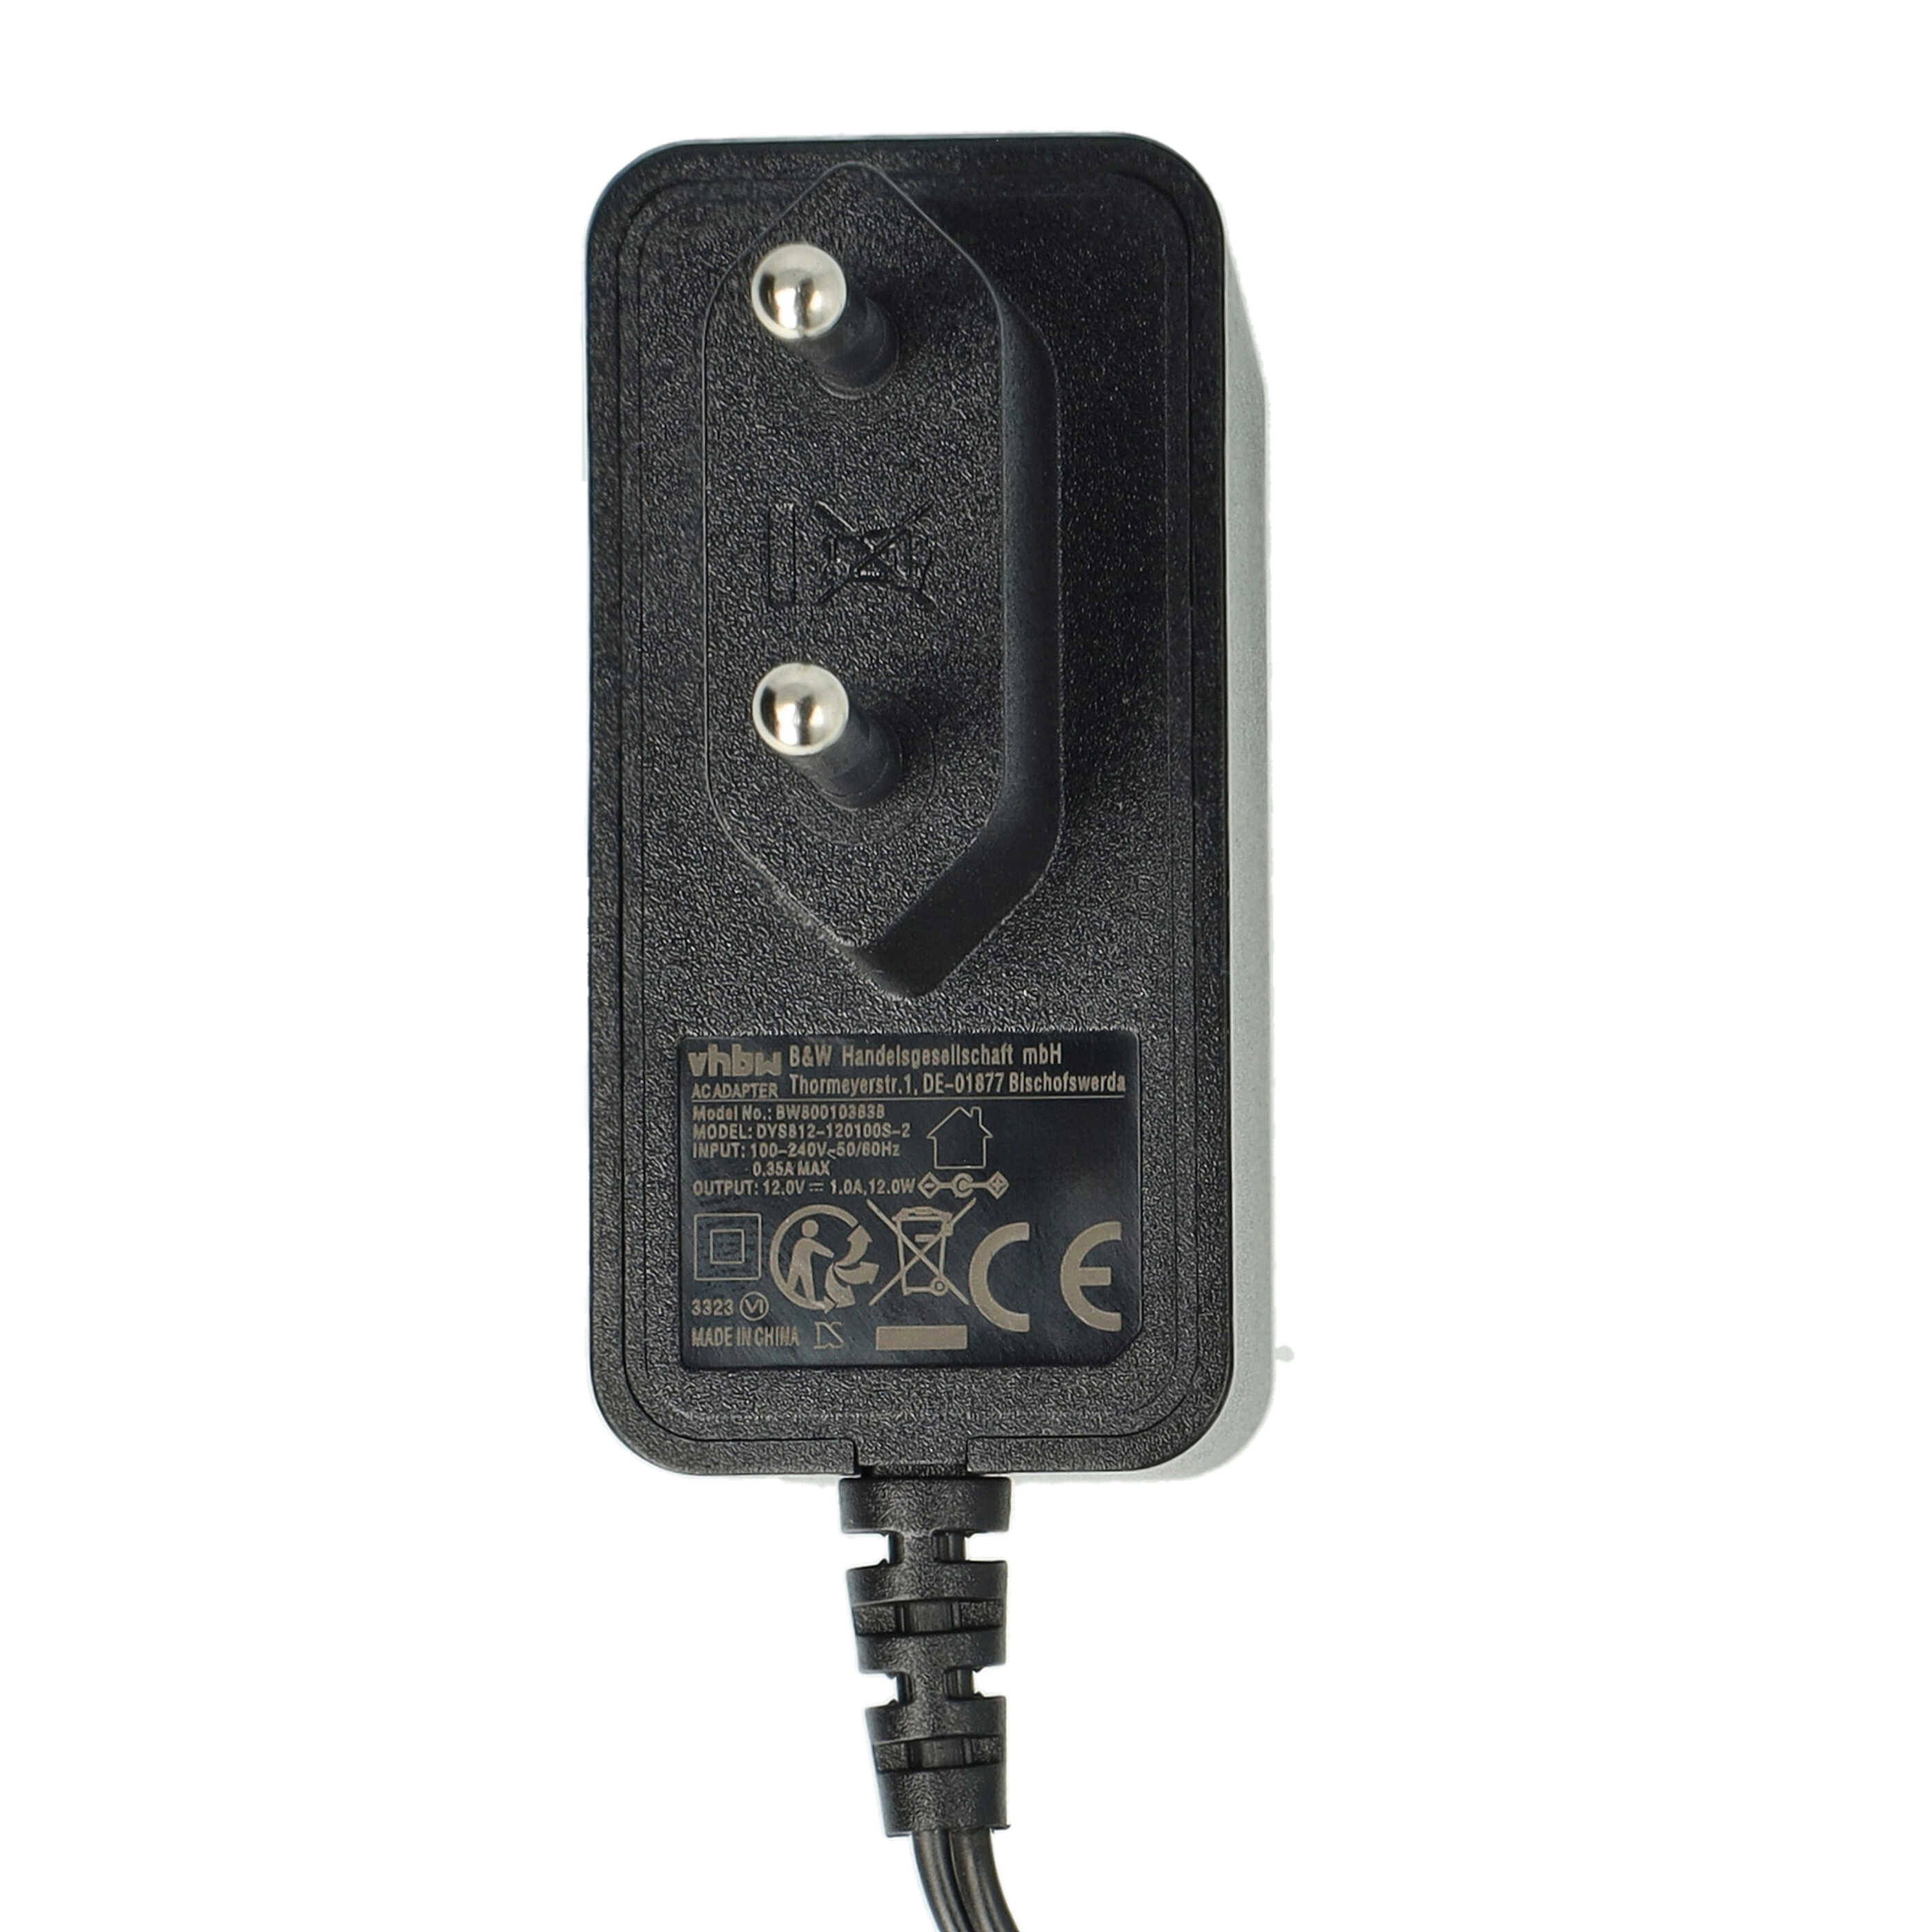 Mains Power Adapter replaces Datalogic EN60950-1 for Datalogic Transformer etc. - 120 cm